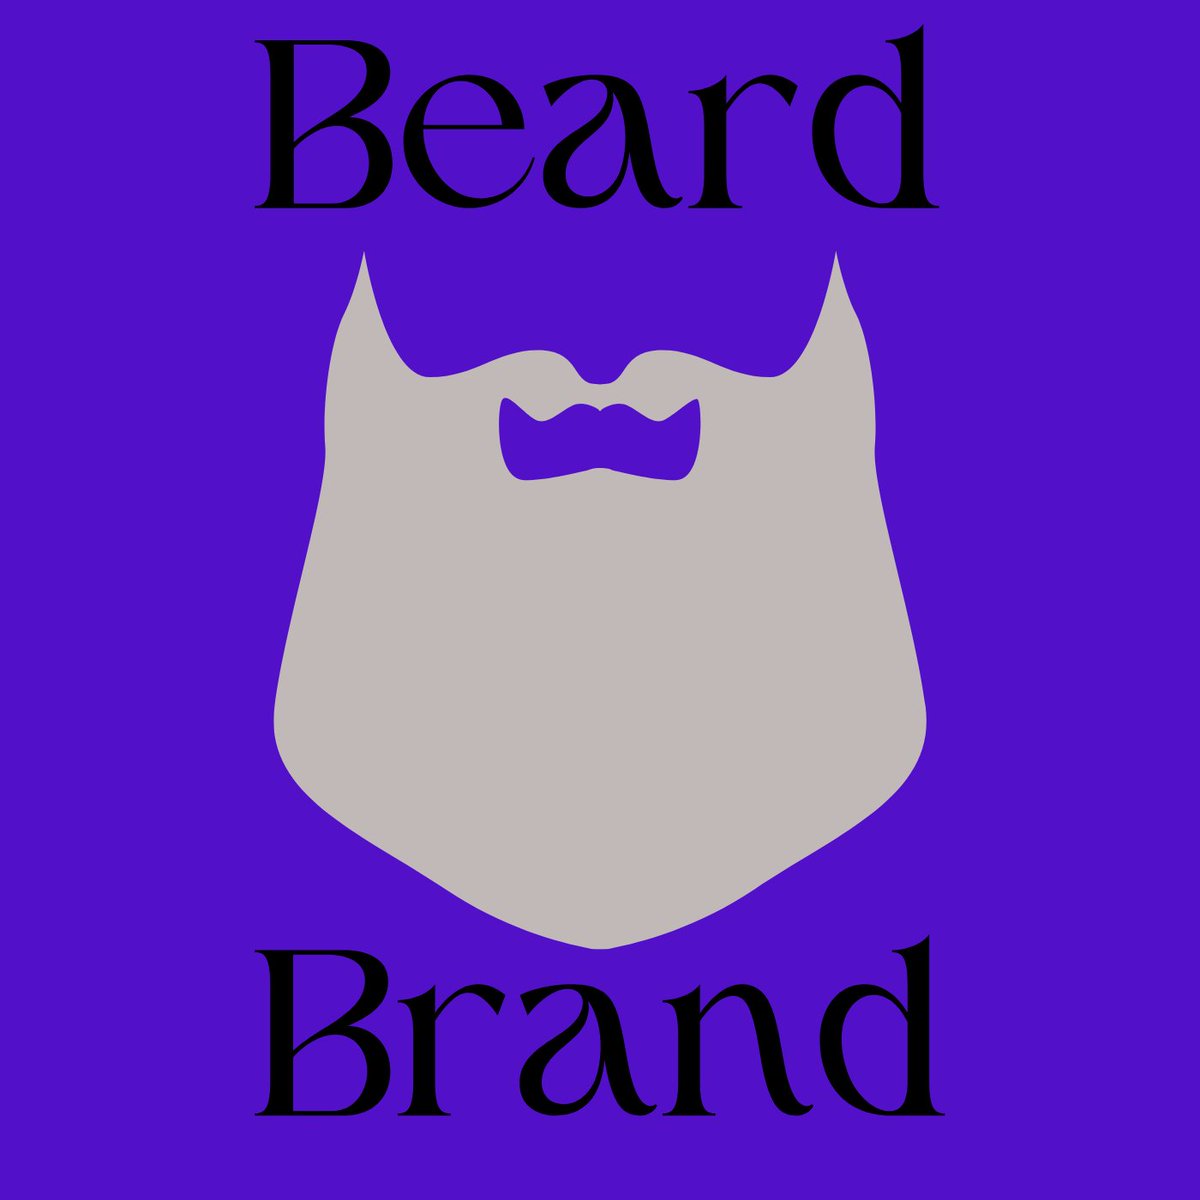 You know where it's at.

#Marbella #brand #trademark #beardedmen #beardman #beard